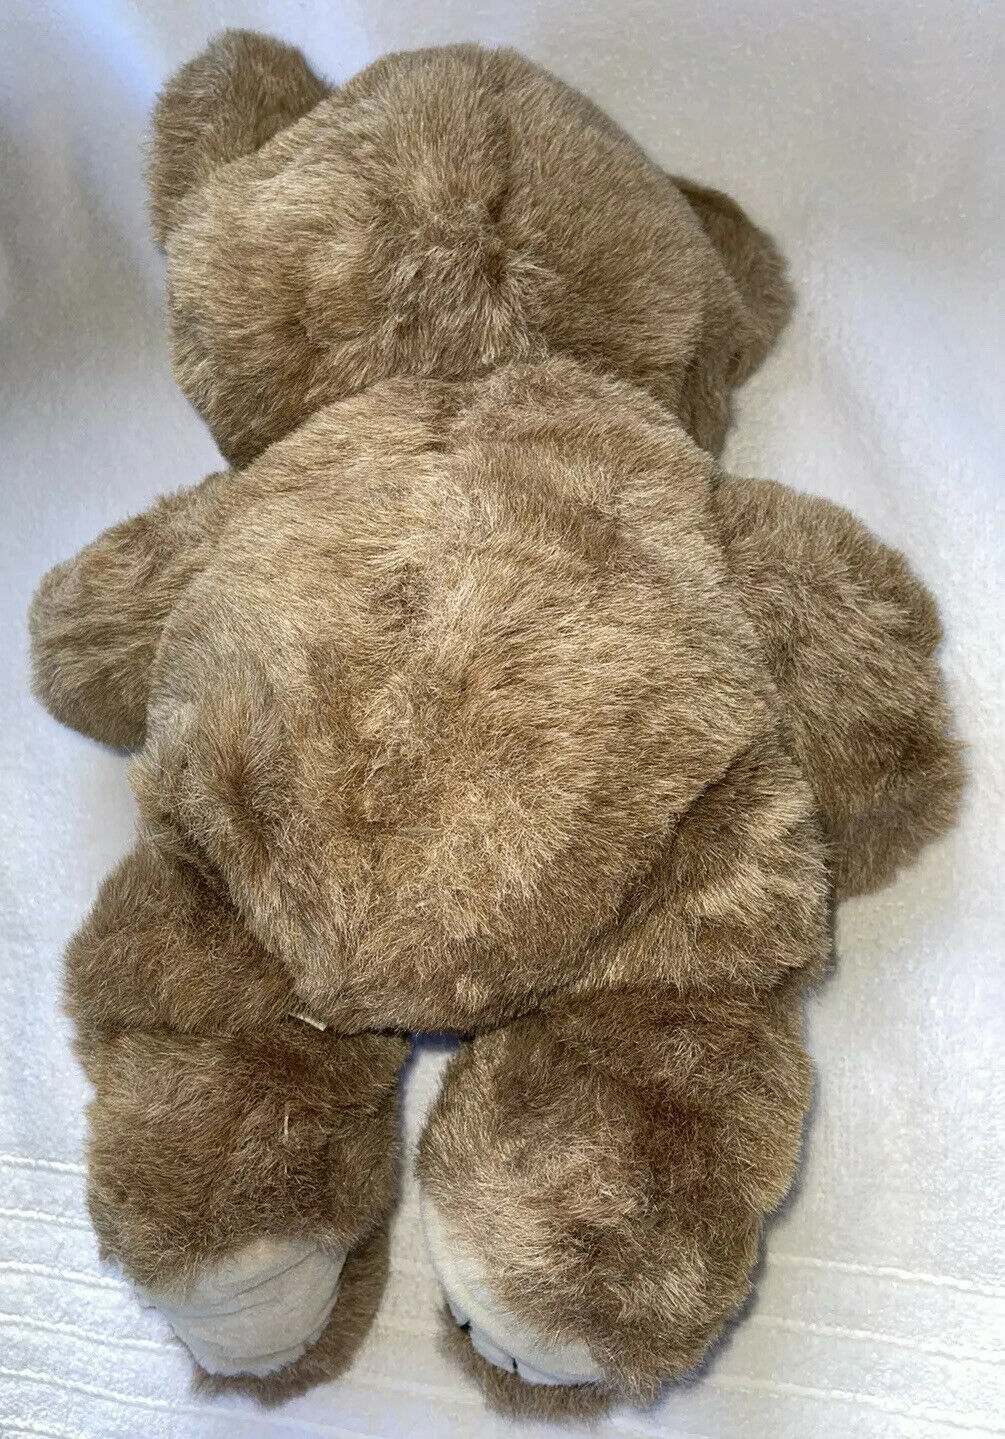 1999 Bennett Brass Button Teddy Bears 1990s Cargo Pants Stuffed Plush -  Ruby Lane